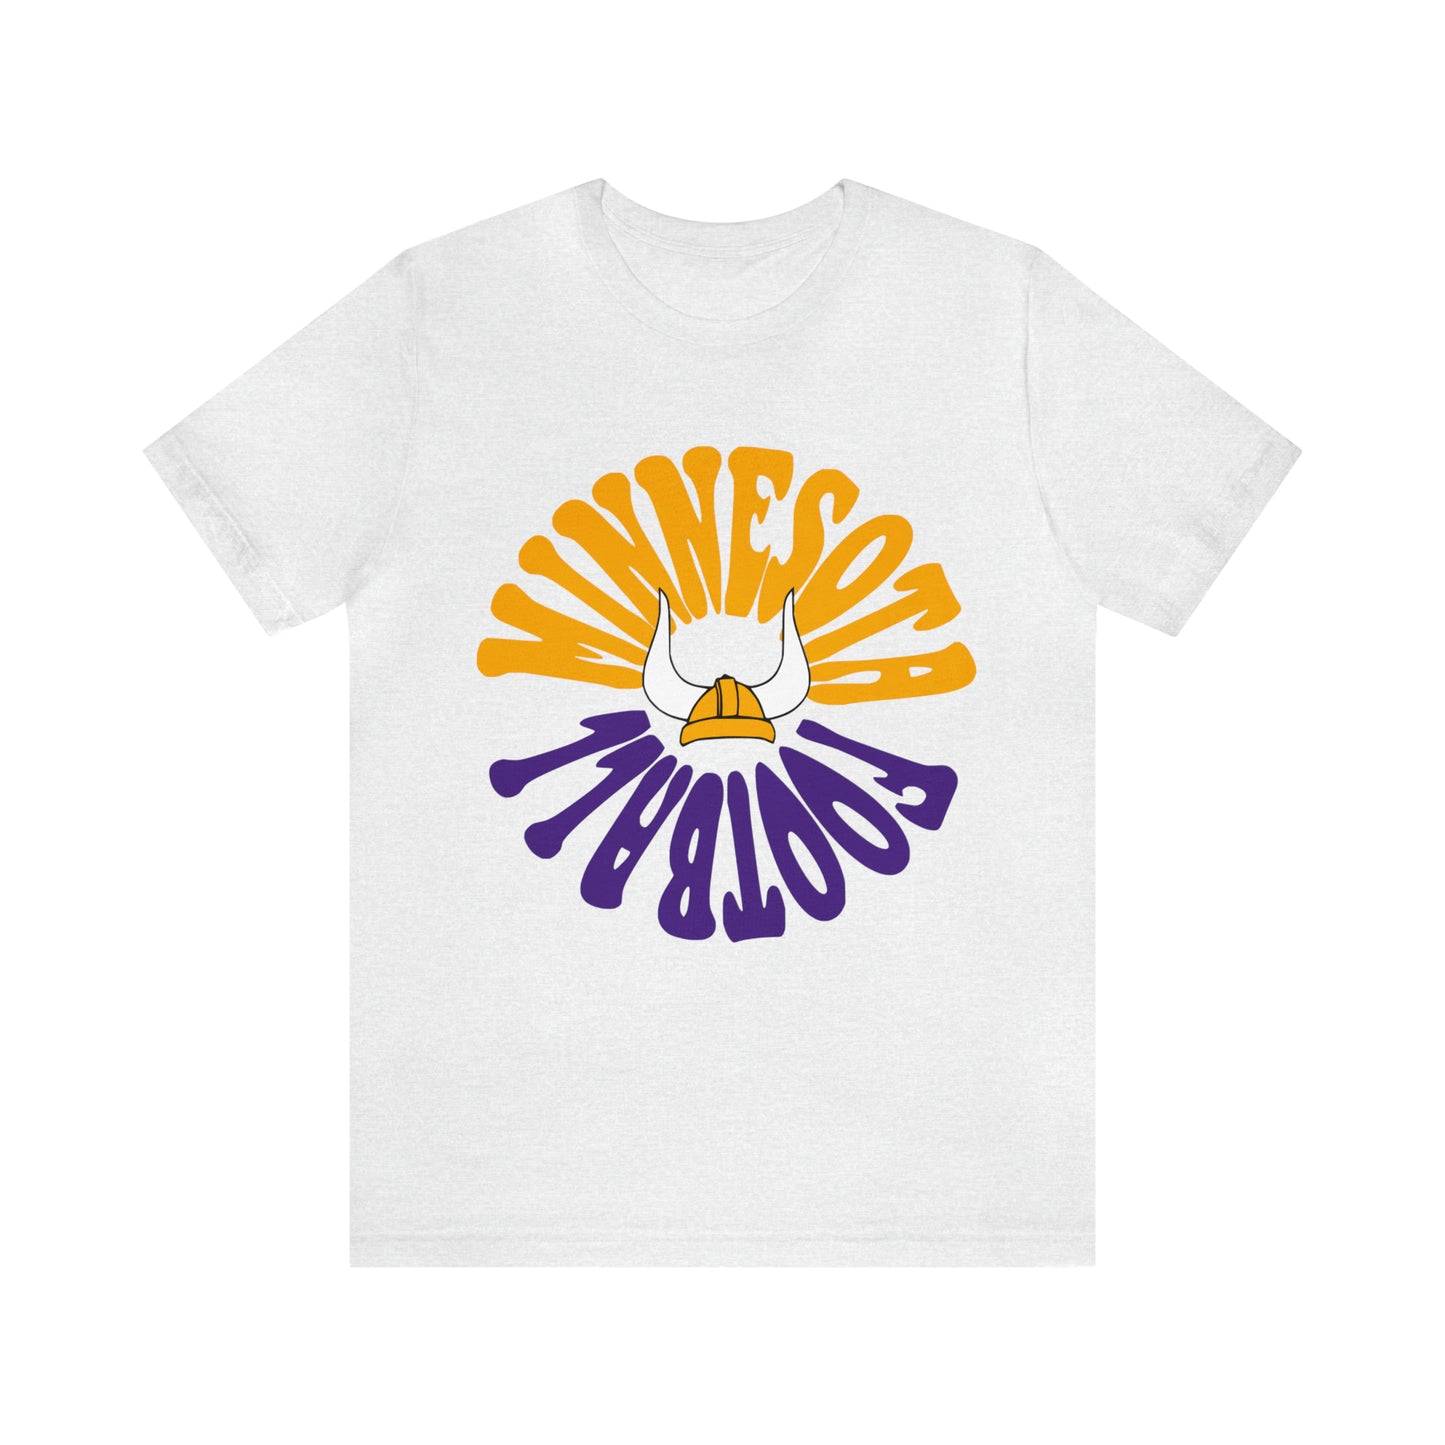 Hippy Retro Minnesota Vikings Tee - 90's Short Sleeve T-Shirt - NFL Football Men's & Women's Apparel - Design 2